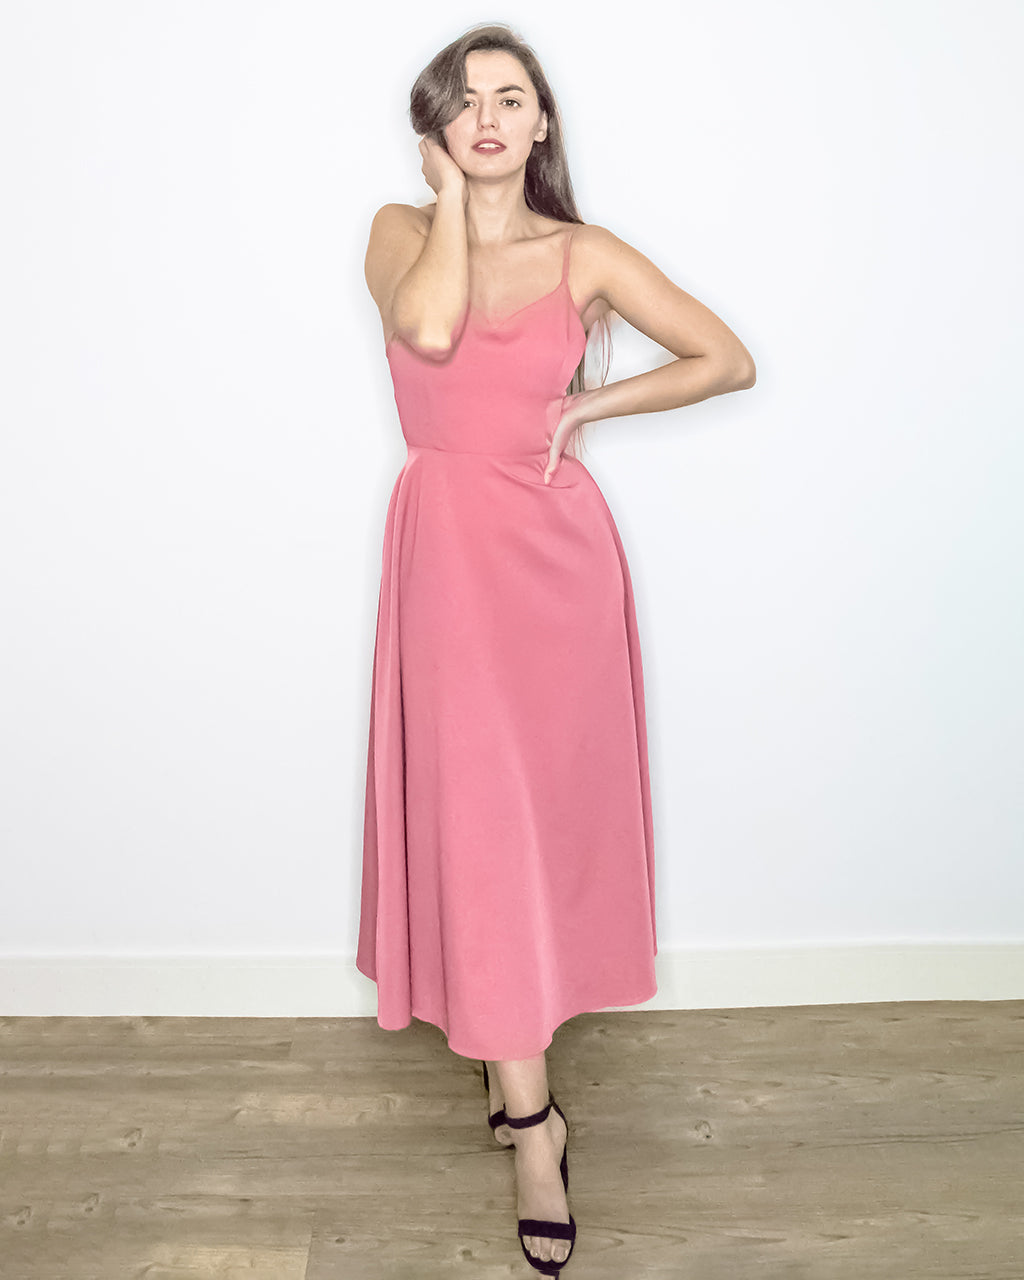 Jae Pink Backless Dress with Bow - Pink Midi Dress